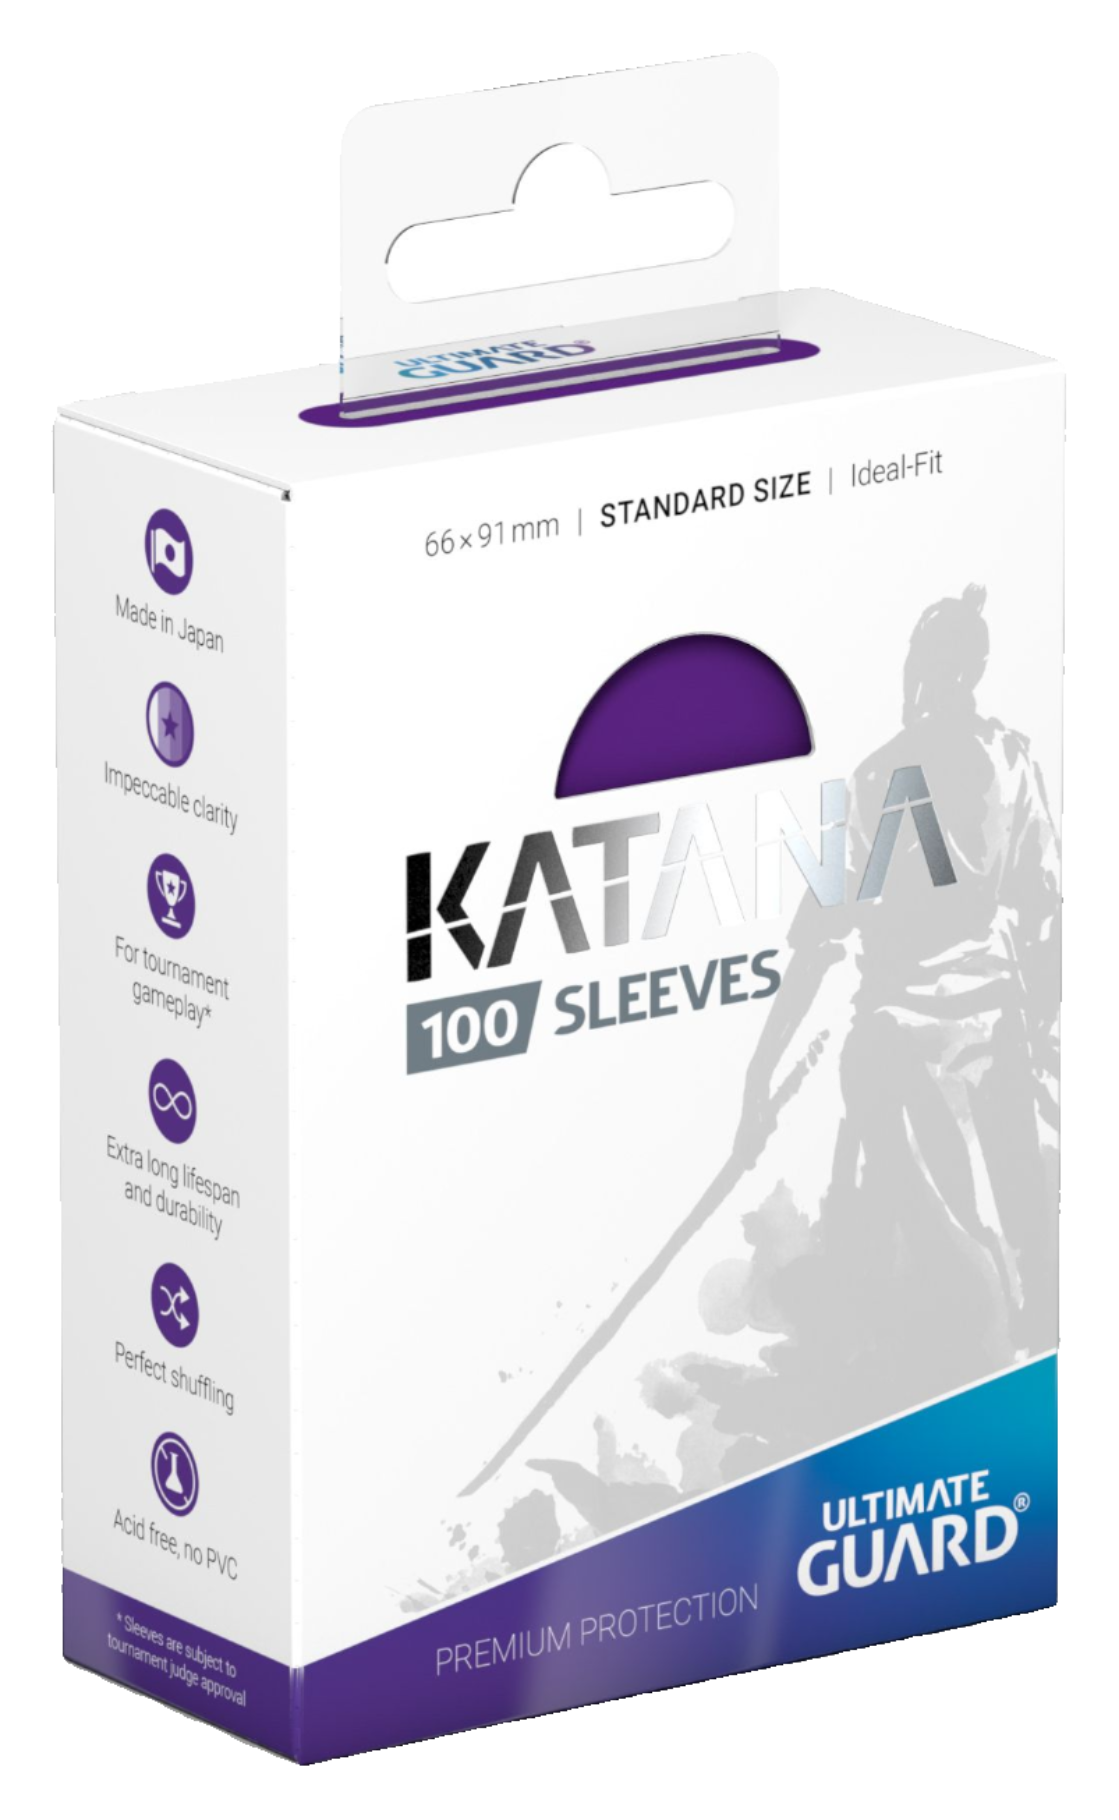 Ultimate Guard - Katana Sleeves - Standard Size - Ideal-Fit - Purple - 100pk